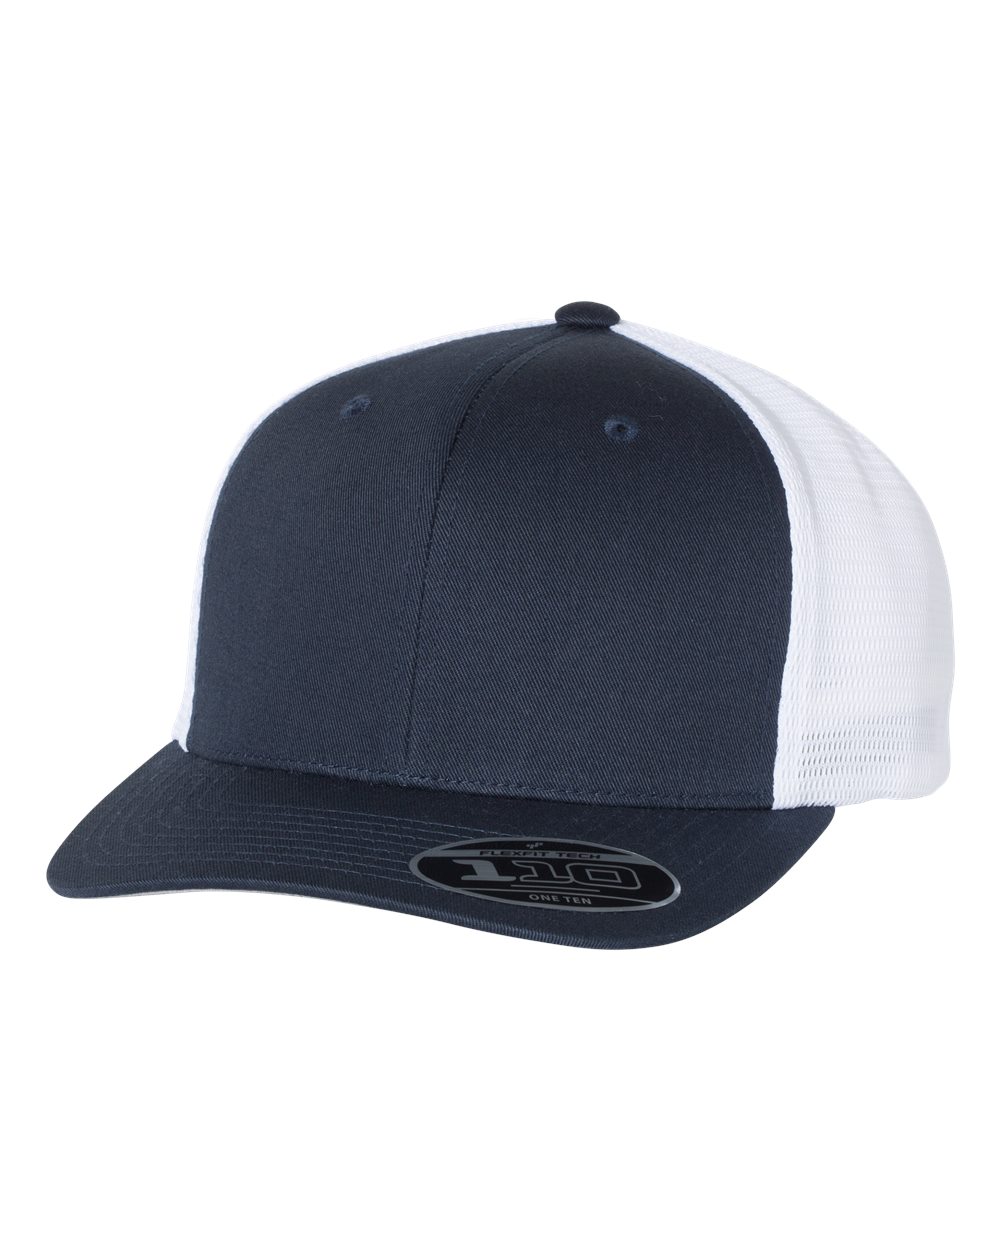 Flexfit 110M - 110® Mesh-Back Cap $7.44 - Headwear | Flex Caps